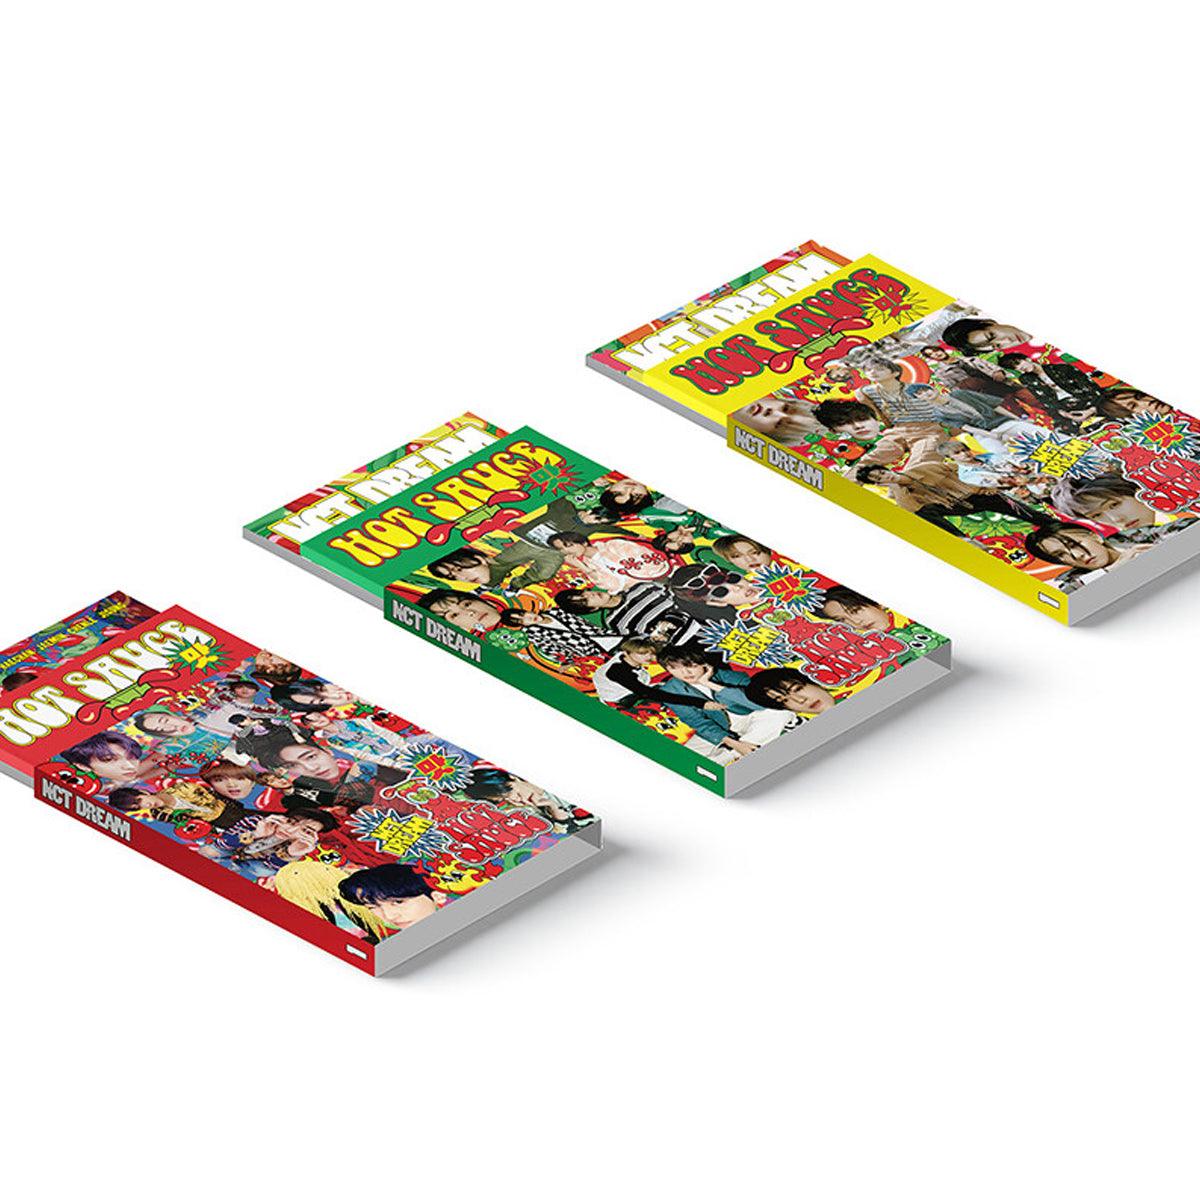 NCT DREAM 1ST ALBUM 'HOT SAUCE' (PHOTO BOOK) SET COVER